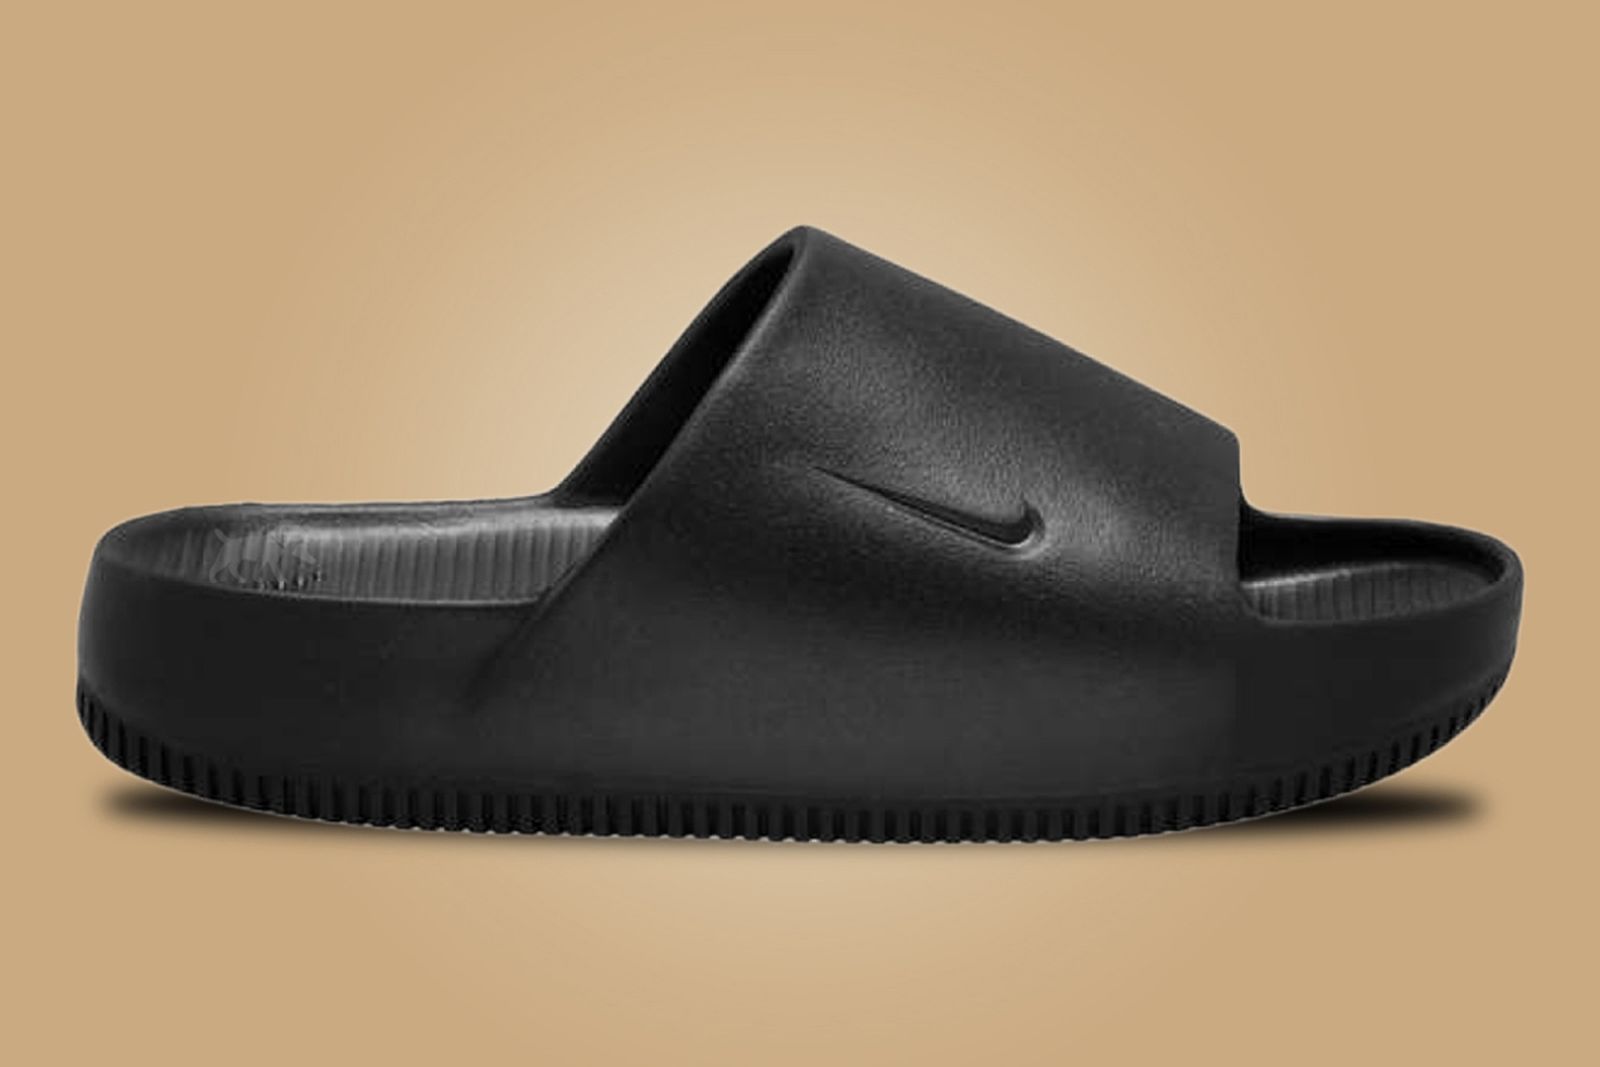 Nike Releasing YEEZY-Like "Calm" Slide Sandals